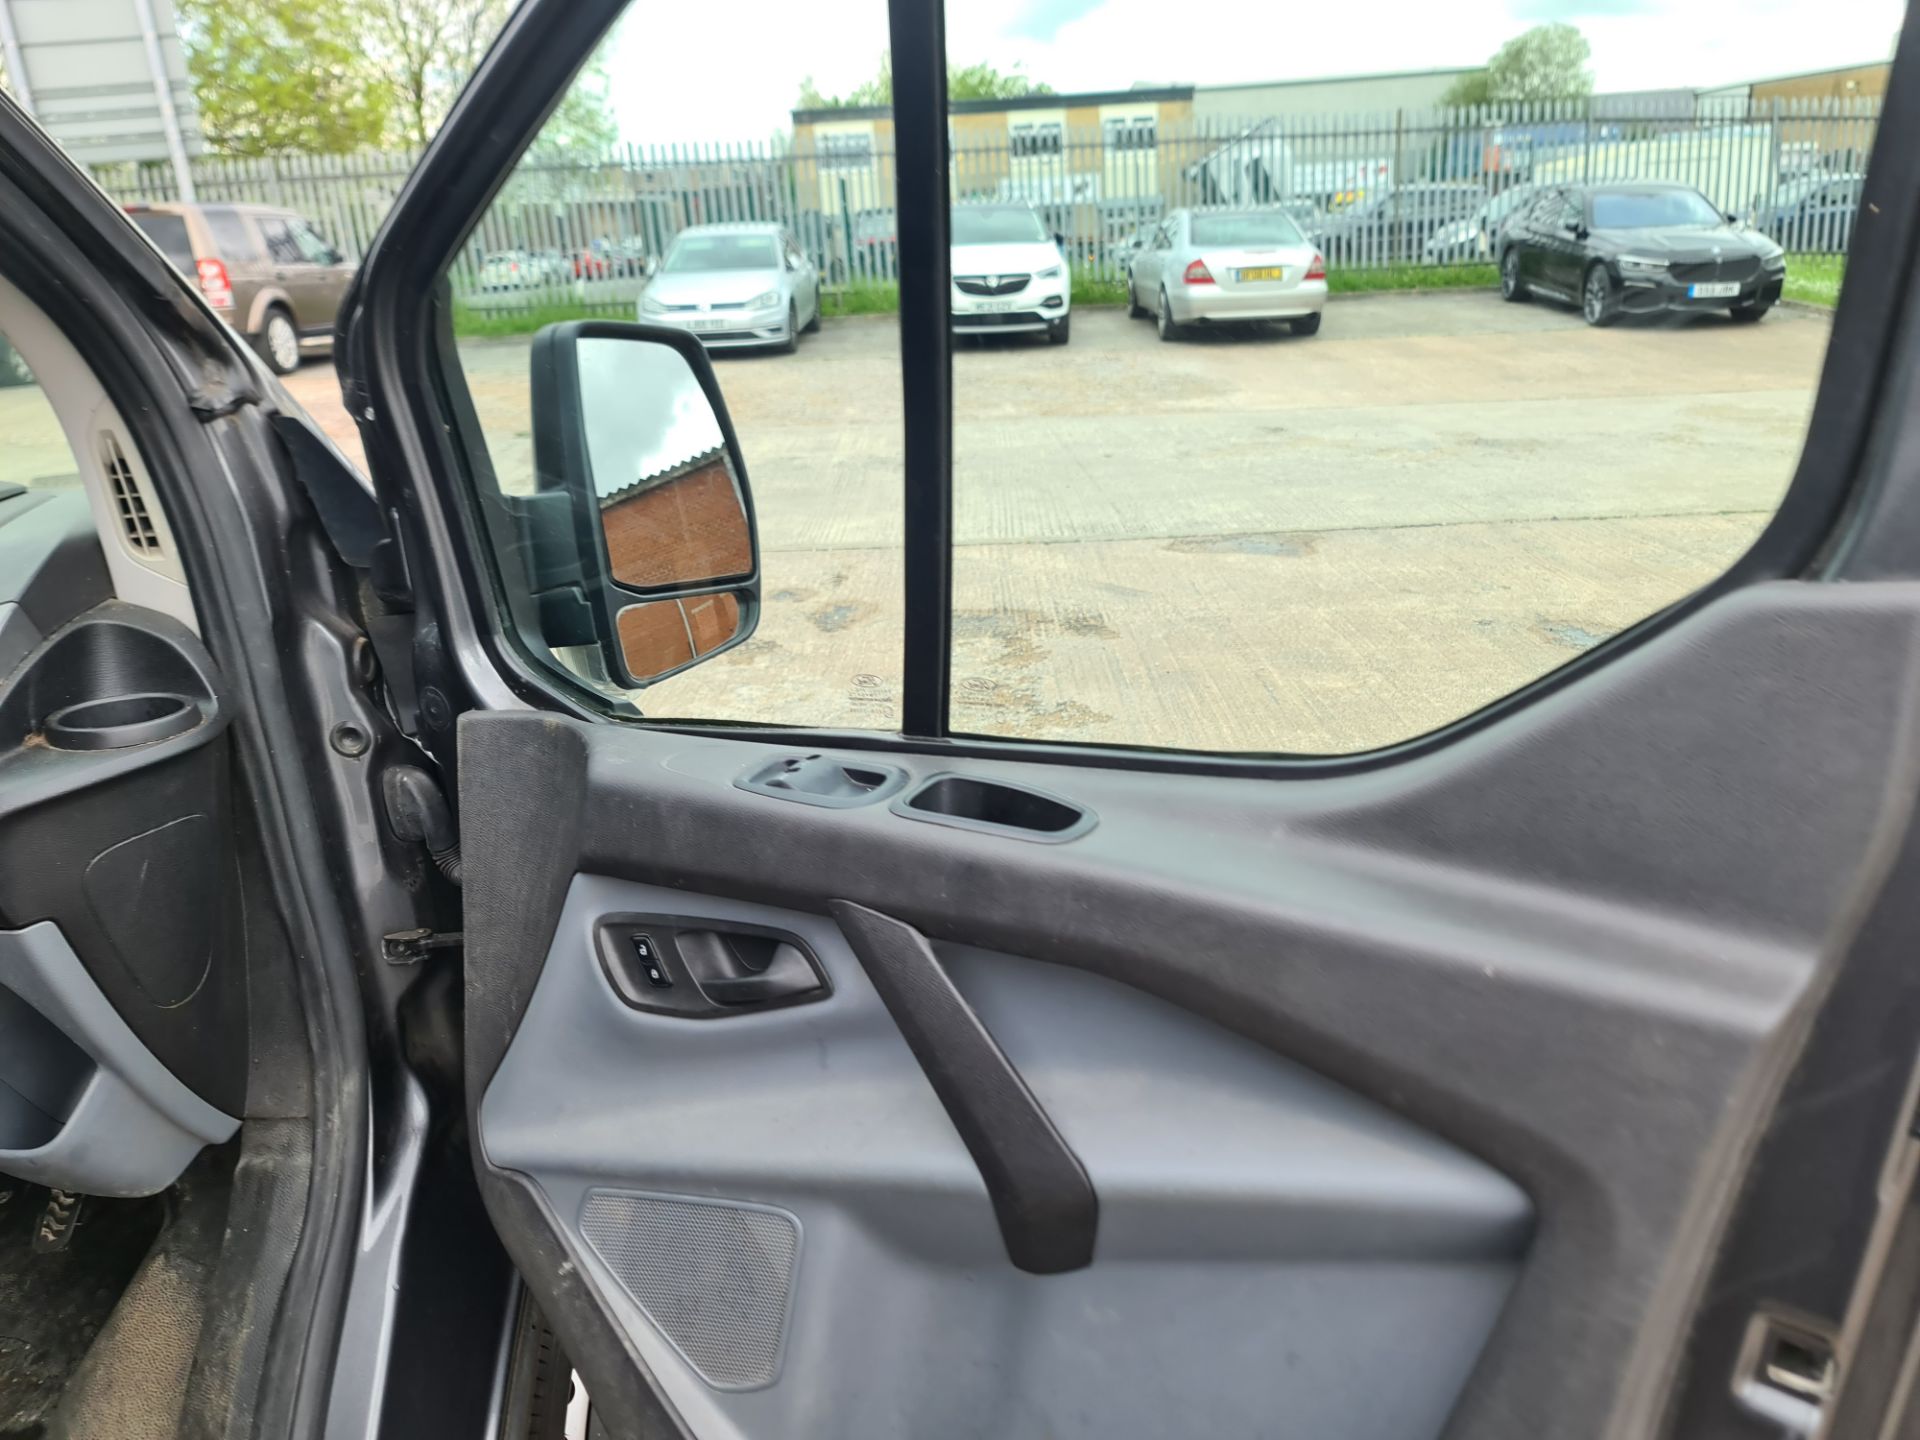 2018 Ford Transit Custom 270 panel van - Image 11 of 71